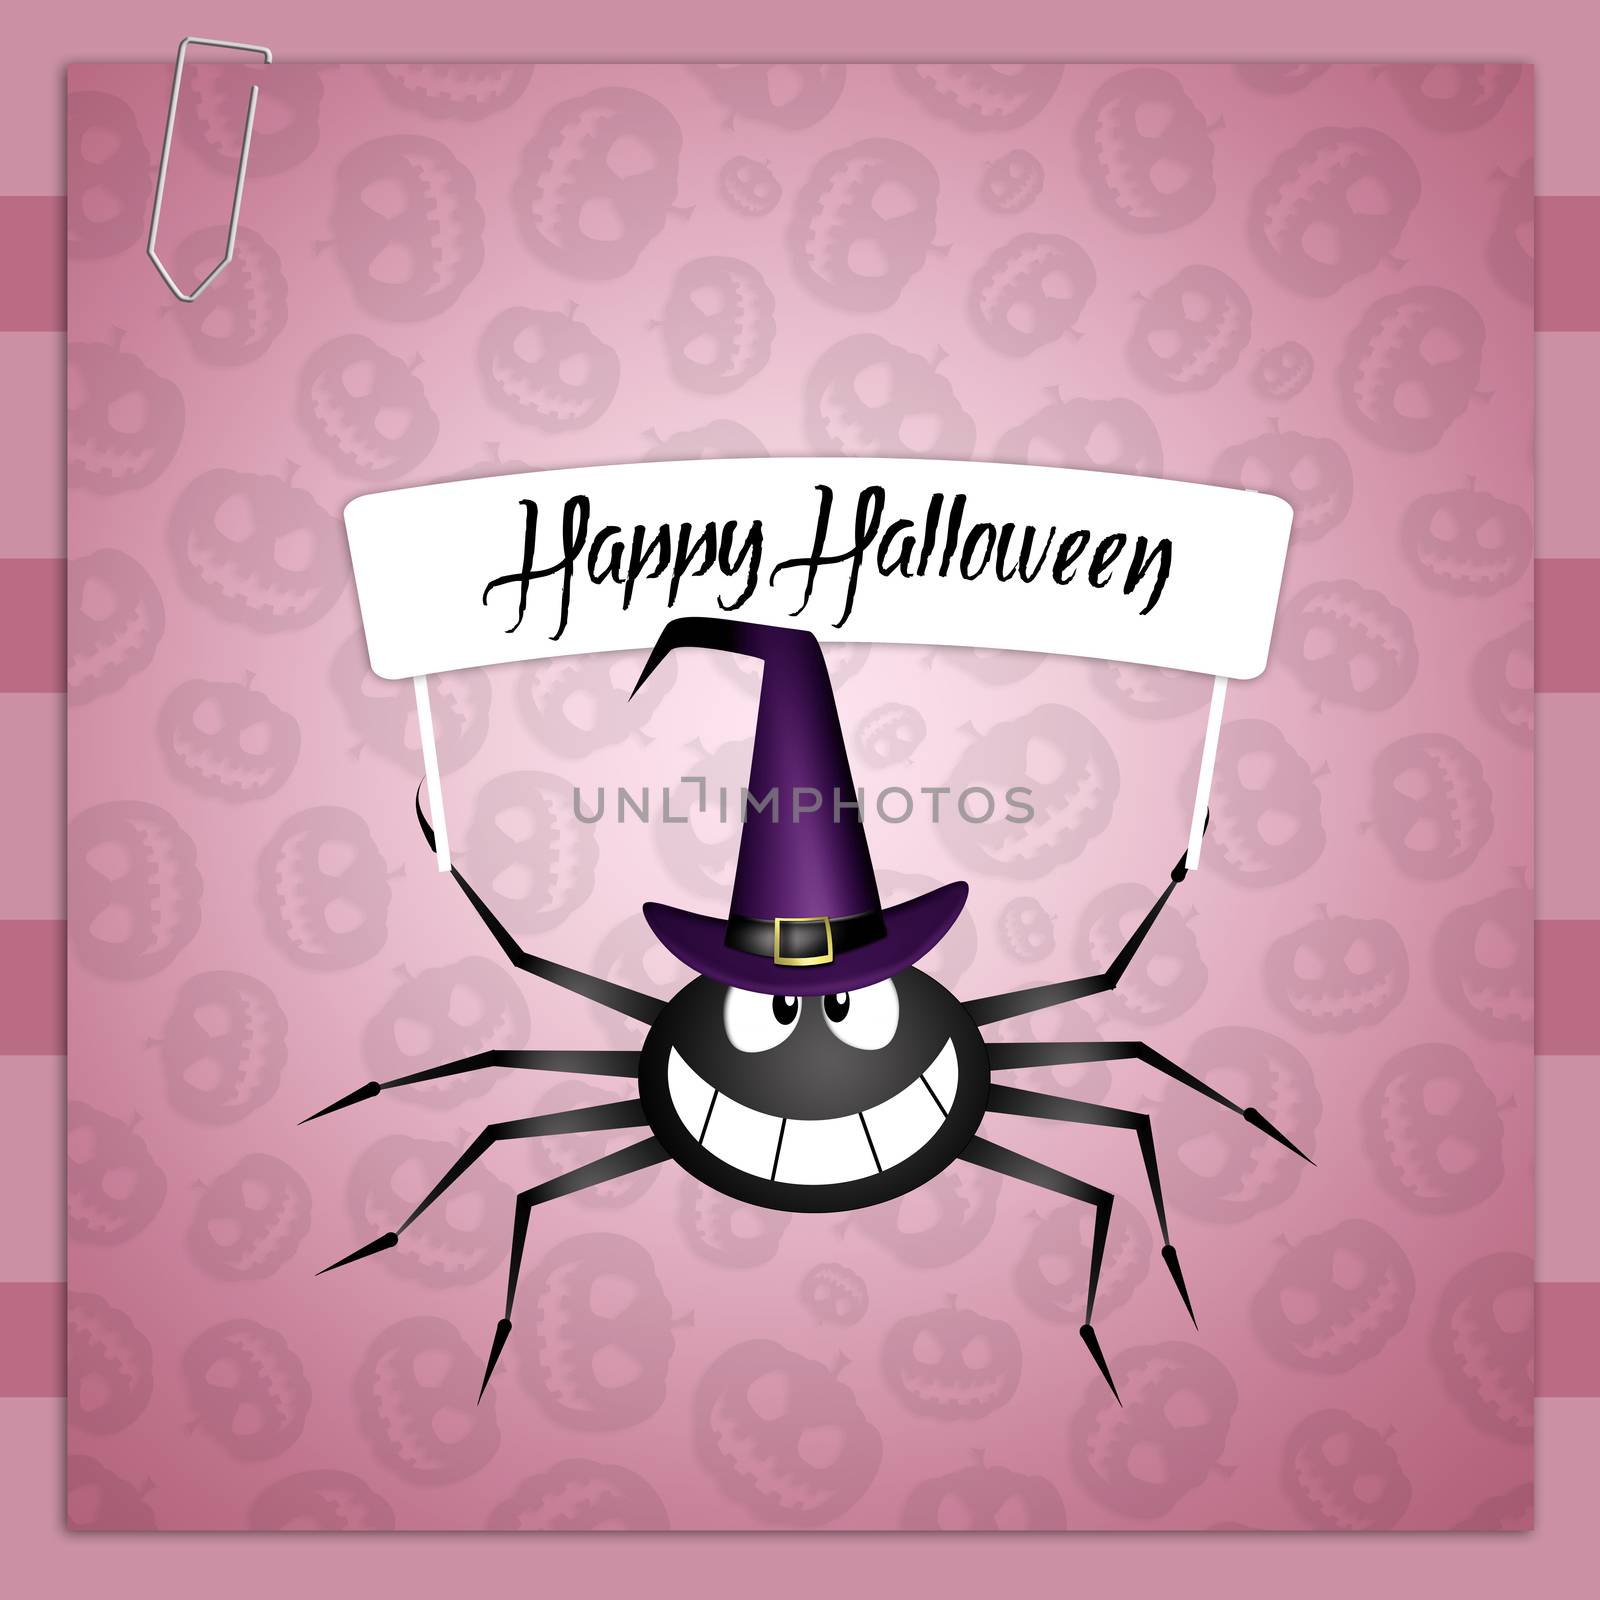 Spider for Happy Halloween